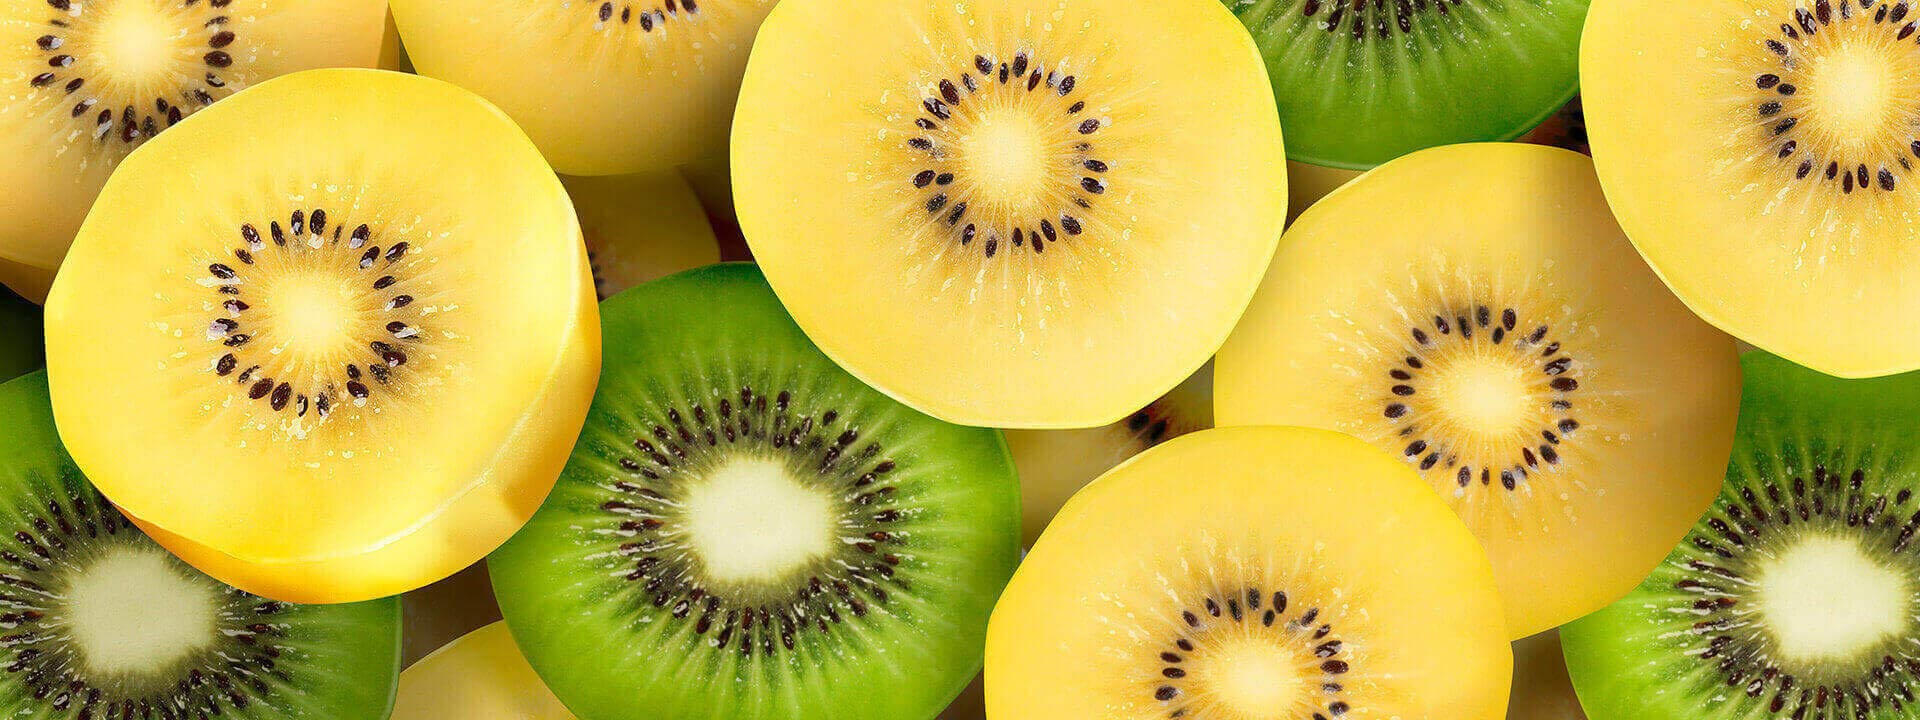 Difference between Green vs Gold kiwi fruit - Zespri US